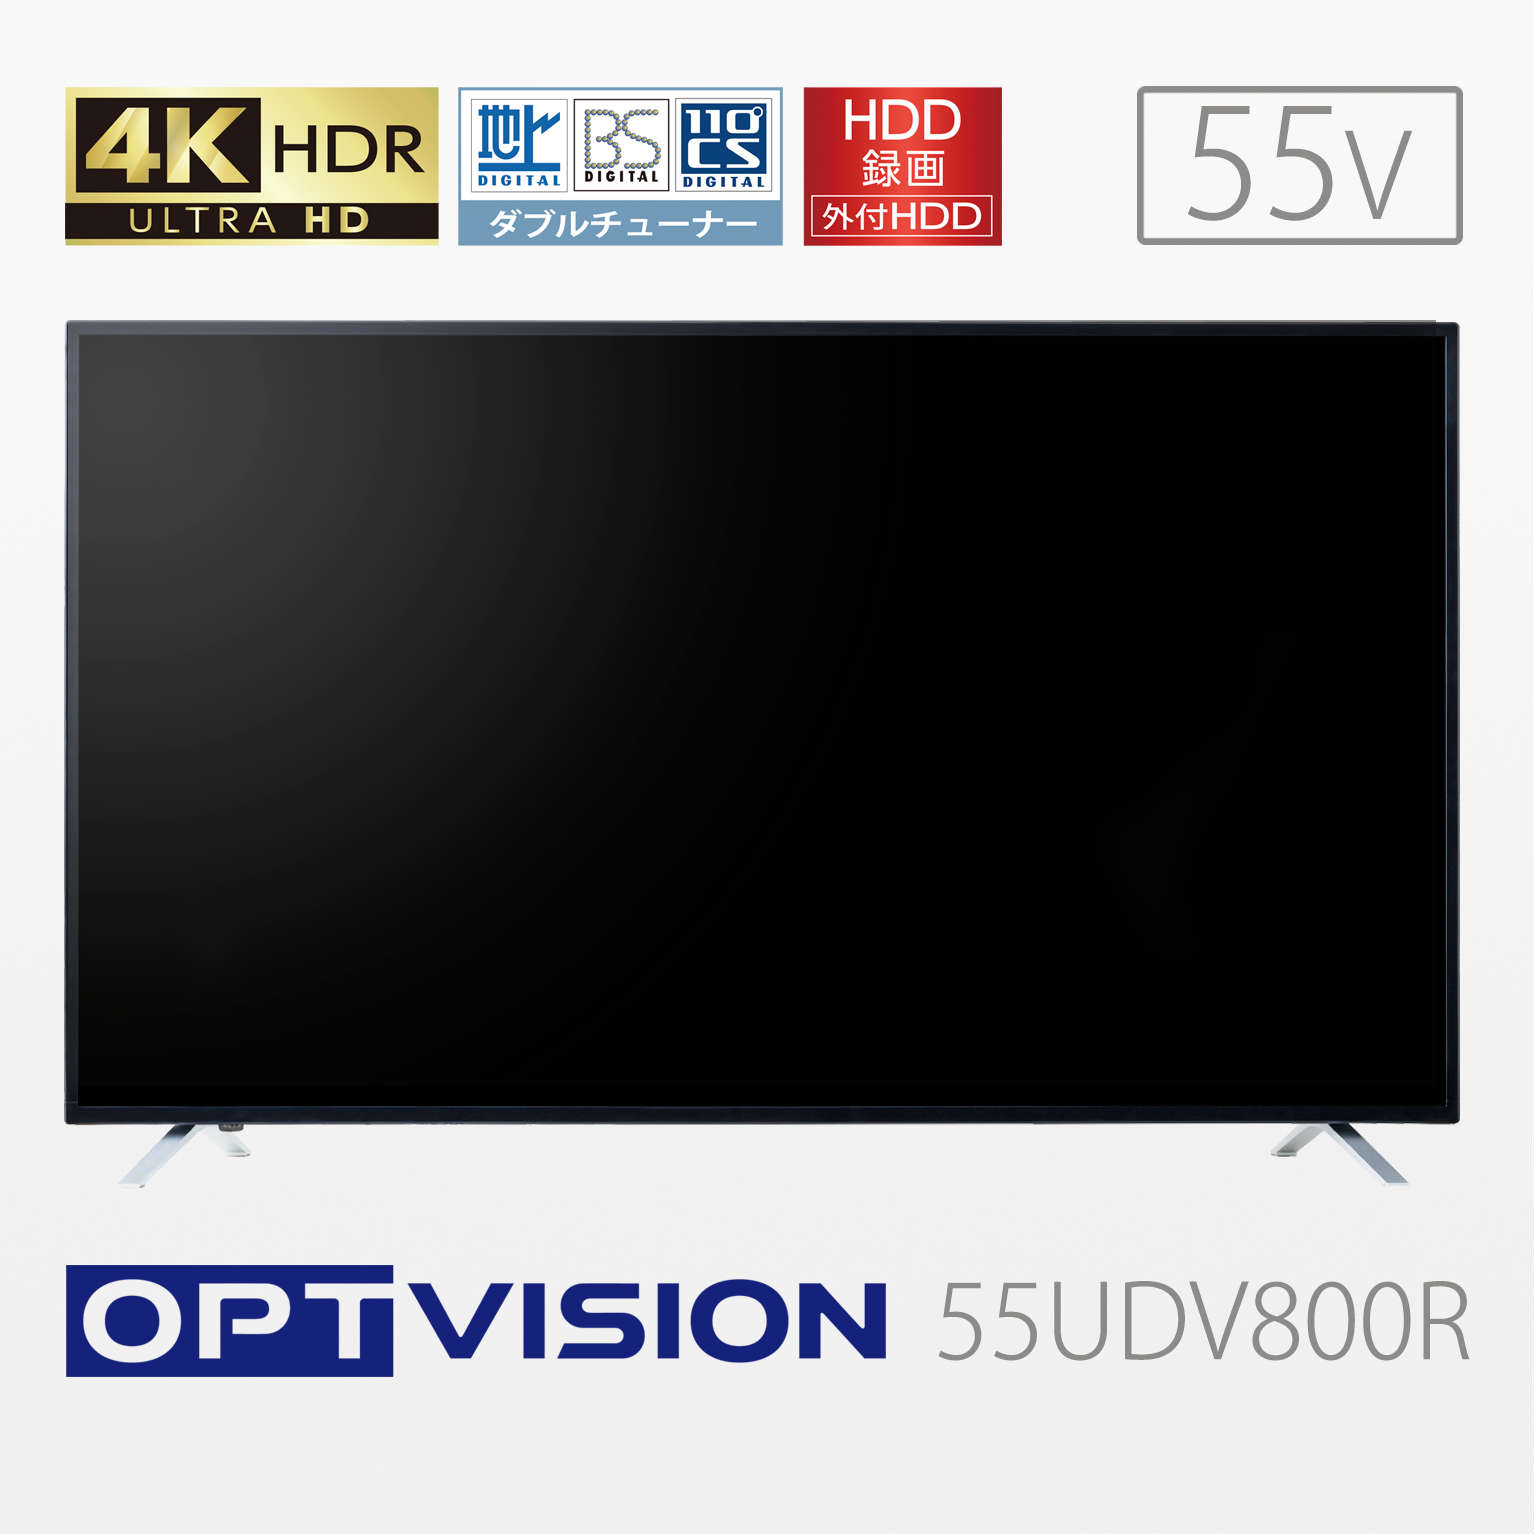 'OPTVISION 55v型 HDR対応4K液晶テレビ 55UDV800R（3年間延長保証あり設置サービスあり）'